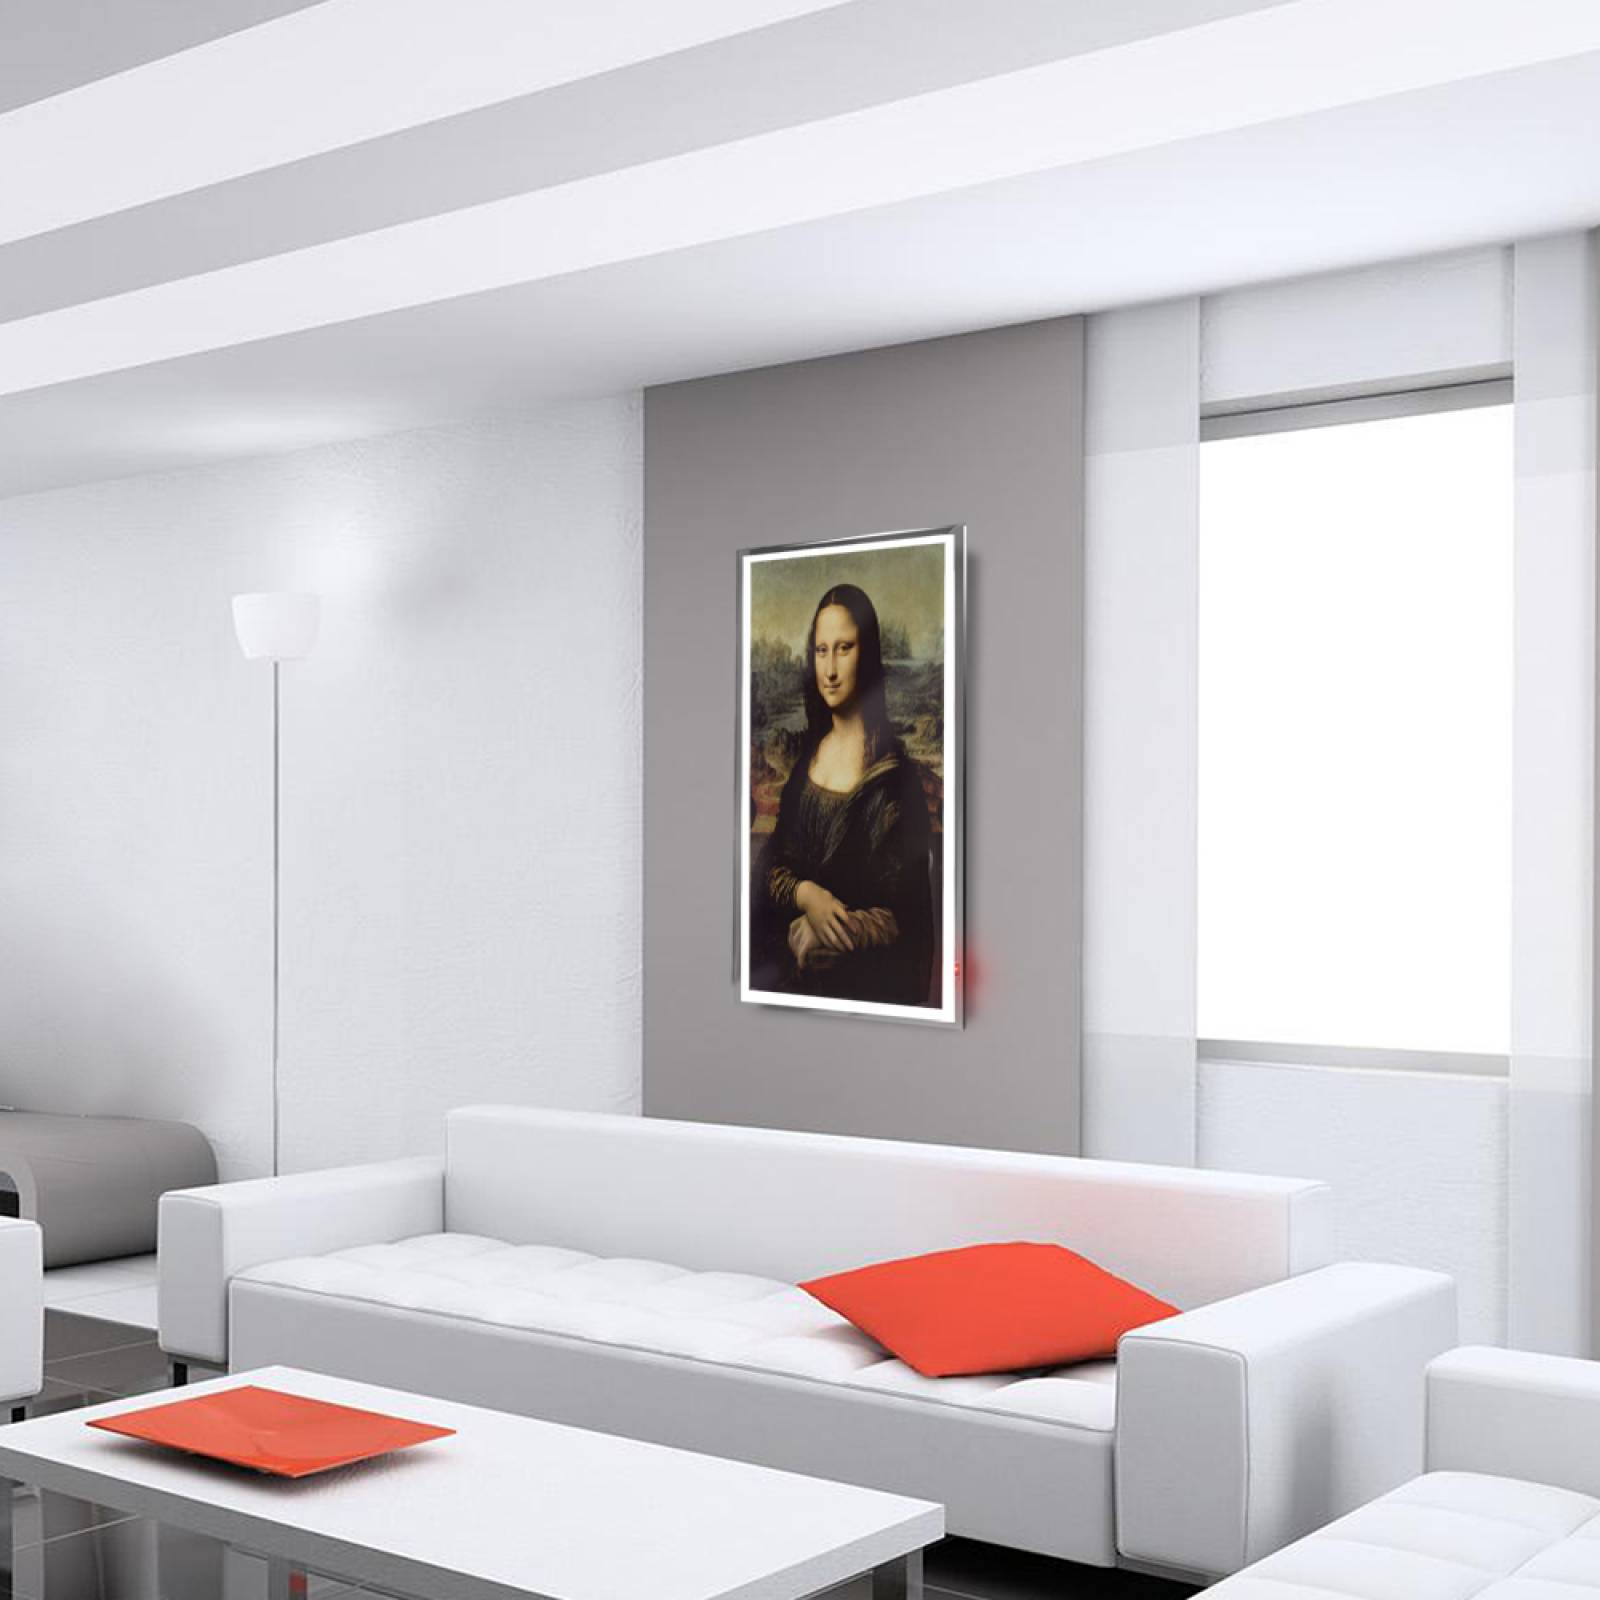 Calefactor de Panel infrarrojo en Cristal para Pared, California Wave Mona Lisa de 380W 60x90cm, Mod: 022CaSol